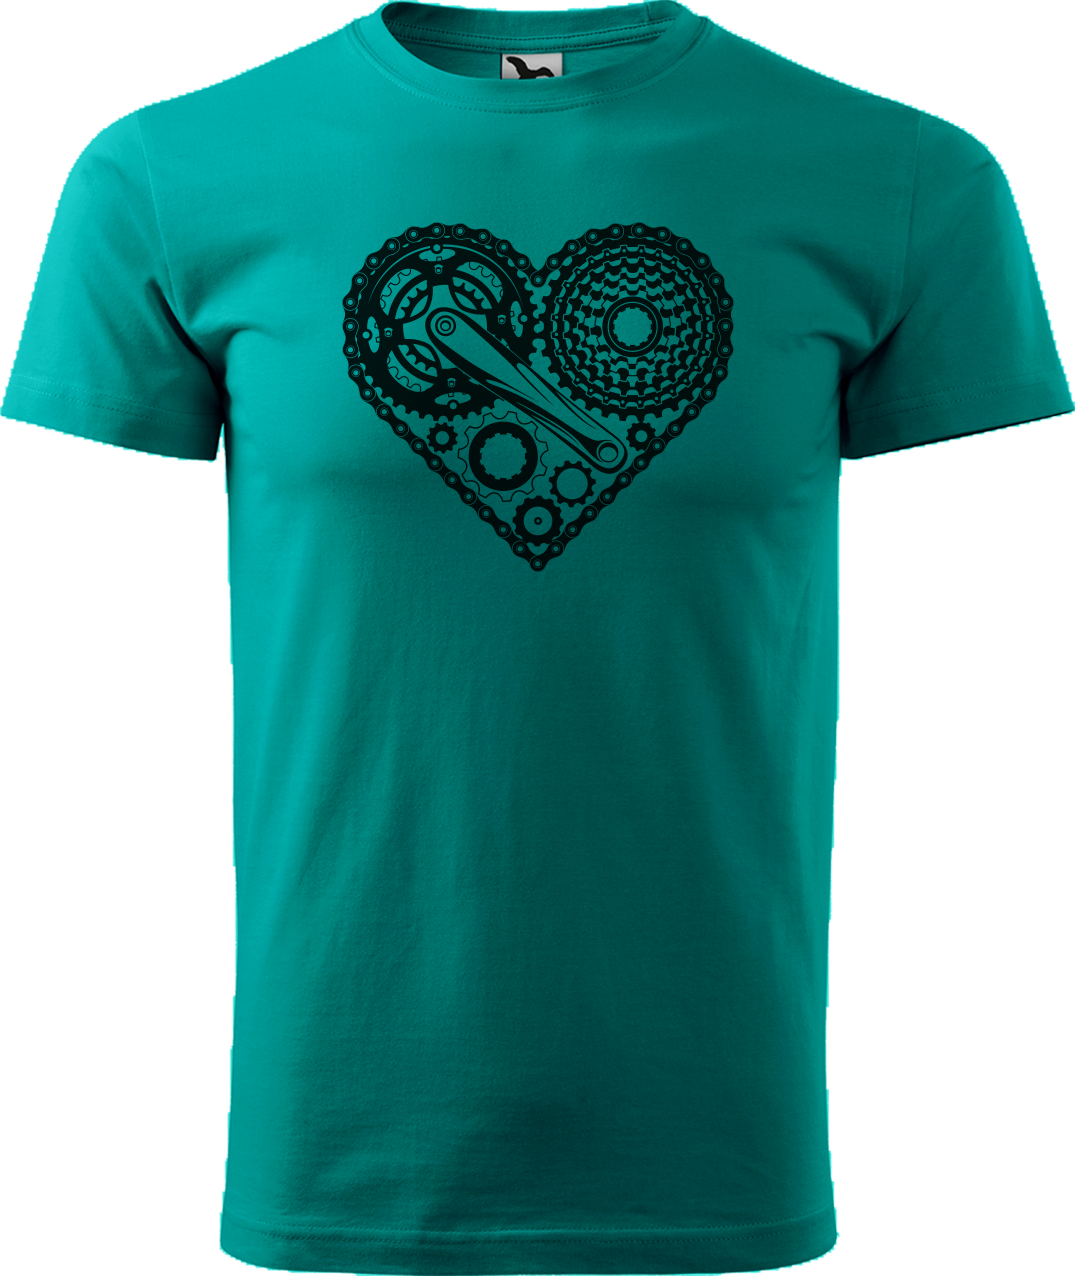 Pánské tričko pro cyklistu - Cyklosrdce Velikost: L, Barva: Emerald (19)